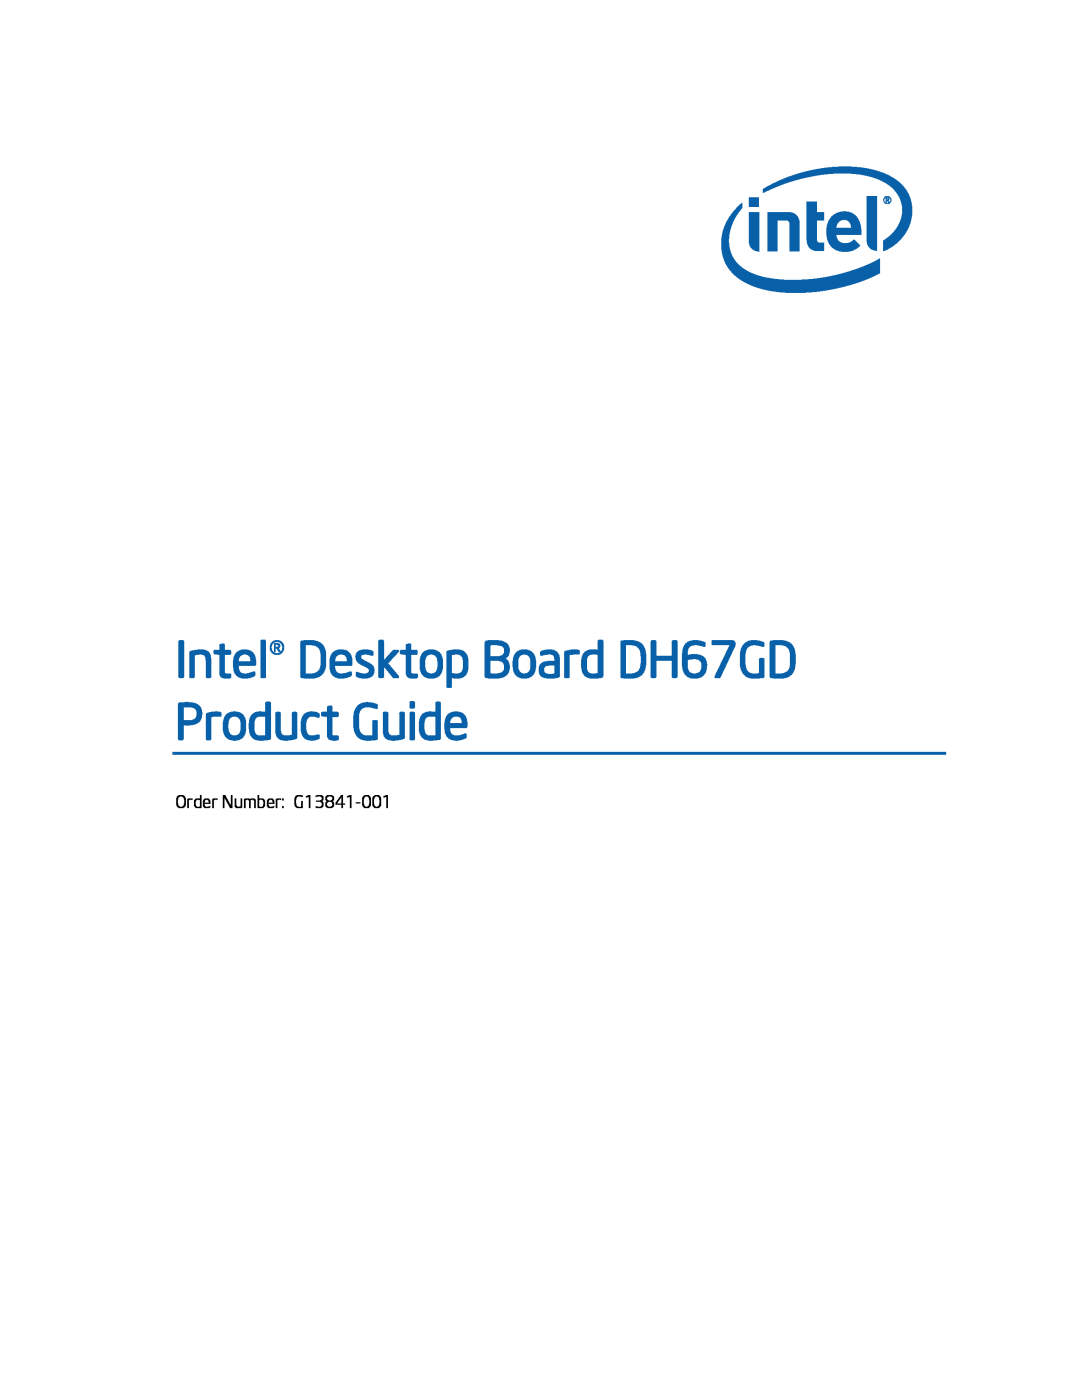 Intel BLKDH67GDB3 manual Intel Desktop Board DH67GD Product Guide, Order Number G13841-001 